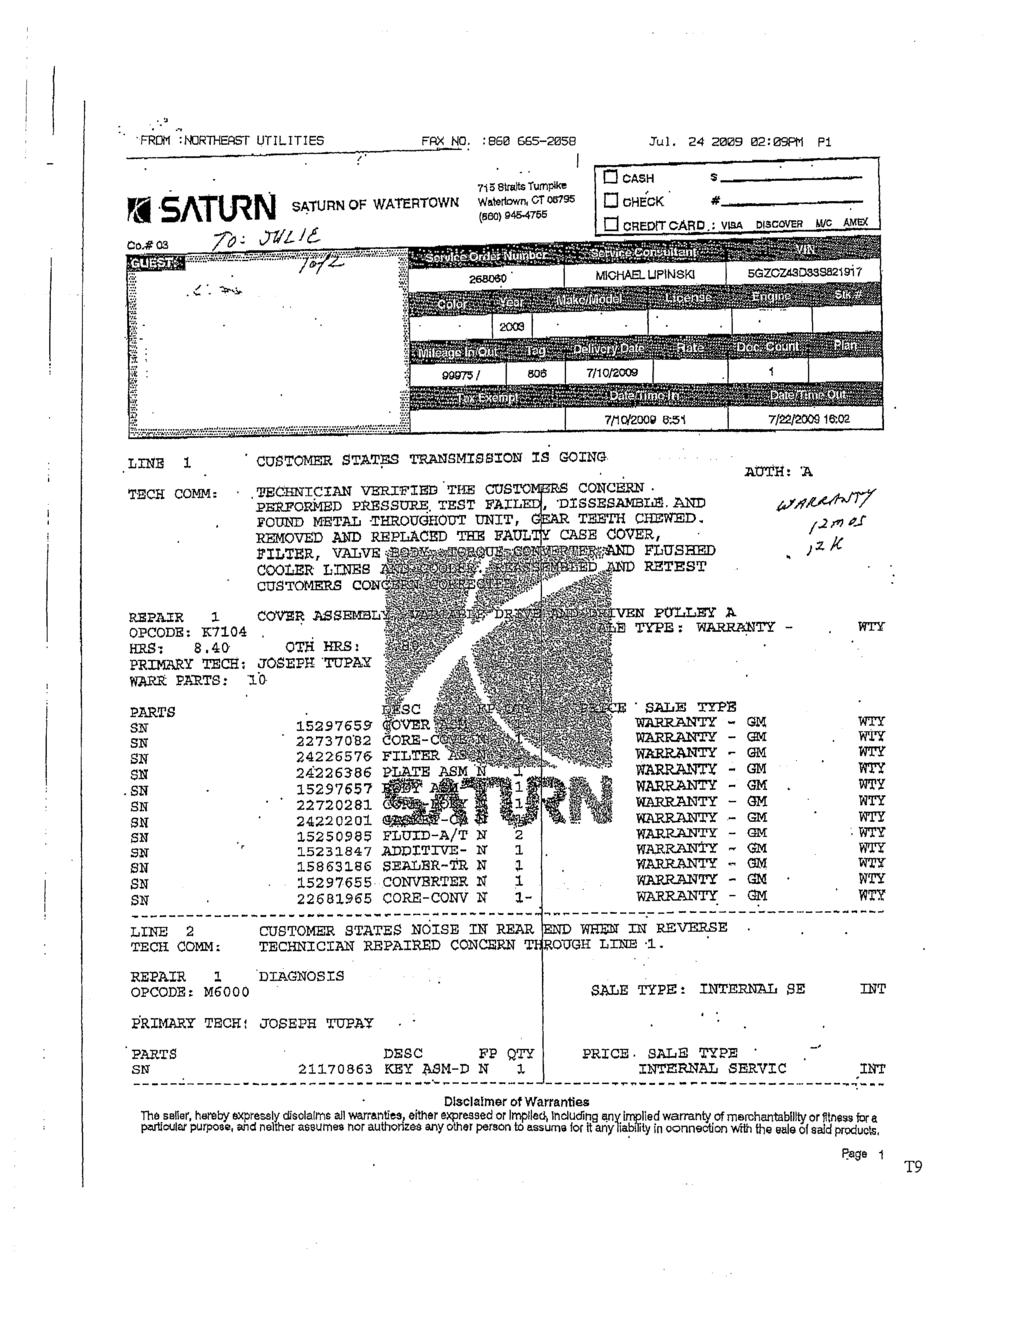 Case 1:09-cv-09011-SAS Document